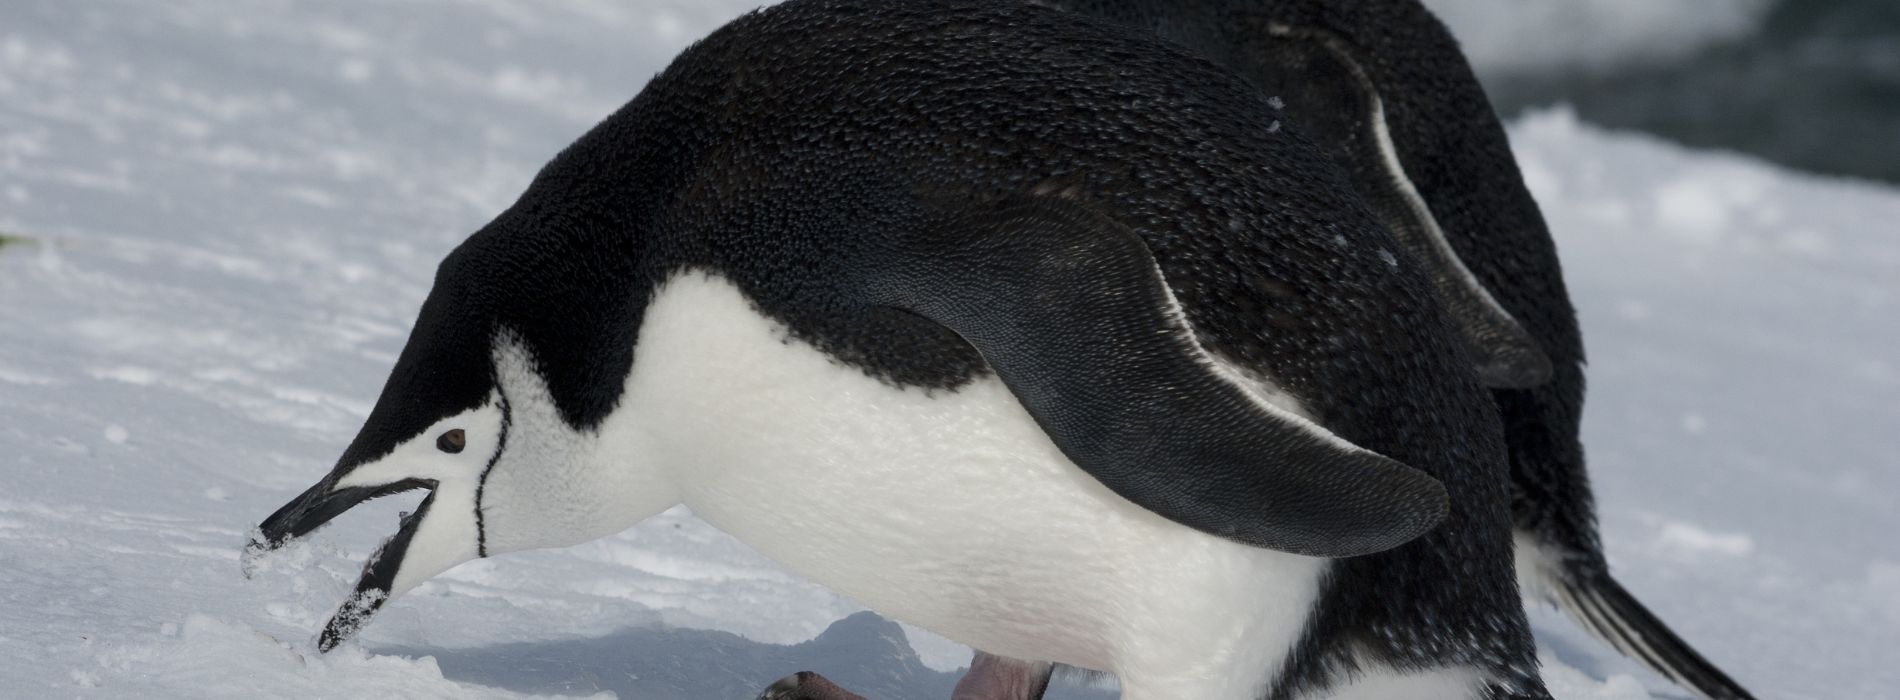 Do Penguins Eat People? Debunking the Myths